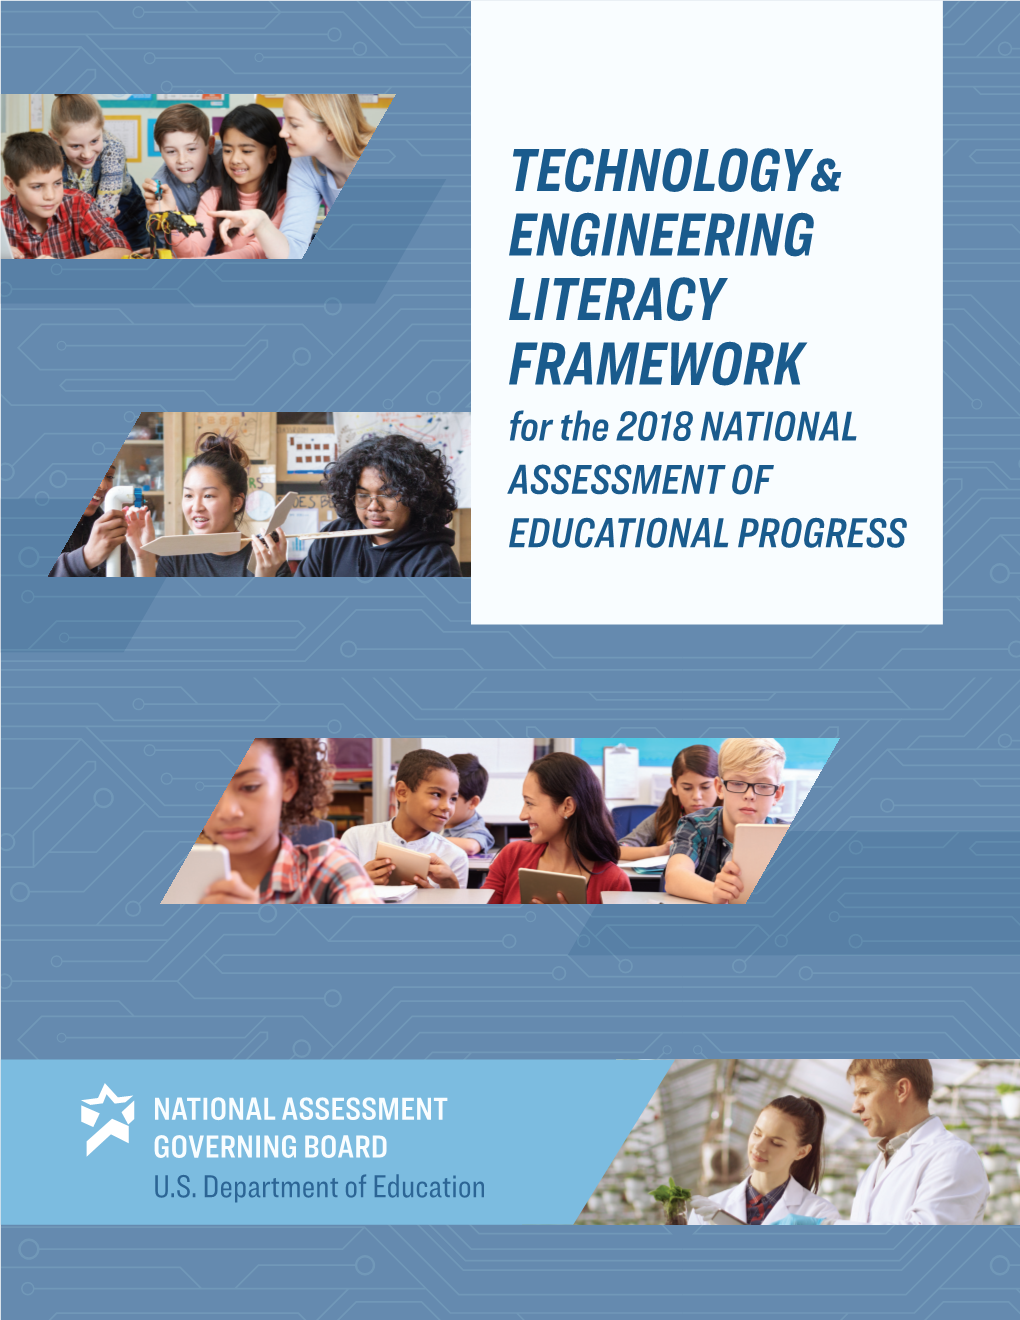 TECHNOLOGY & ENGINEERING LITERACY FRAMEWORK for the 2018 NATIONAL ASSESSMENT of EDUCATIONAL PROGRESS